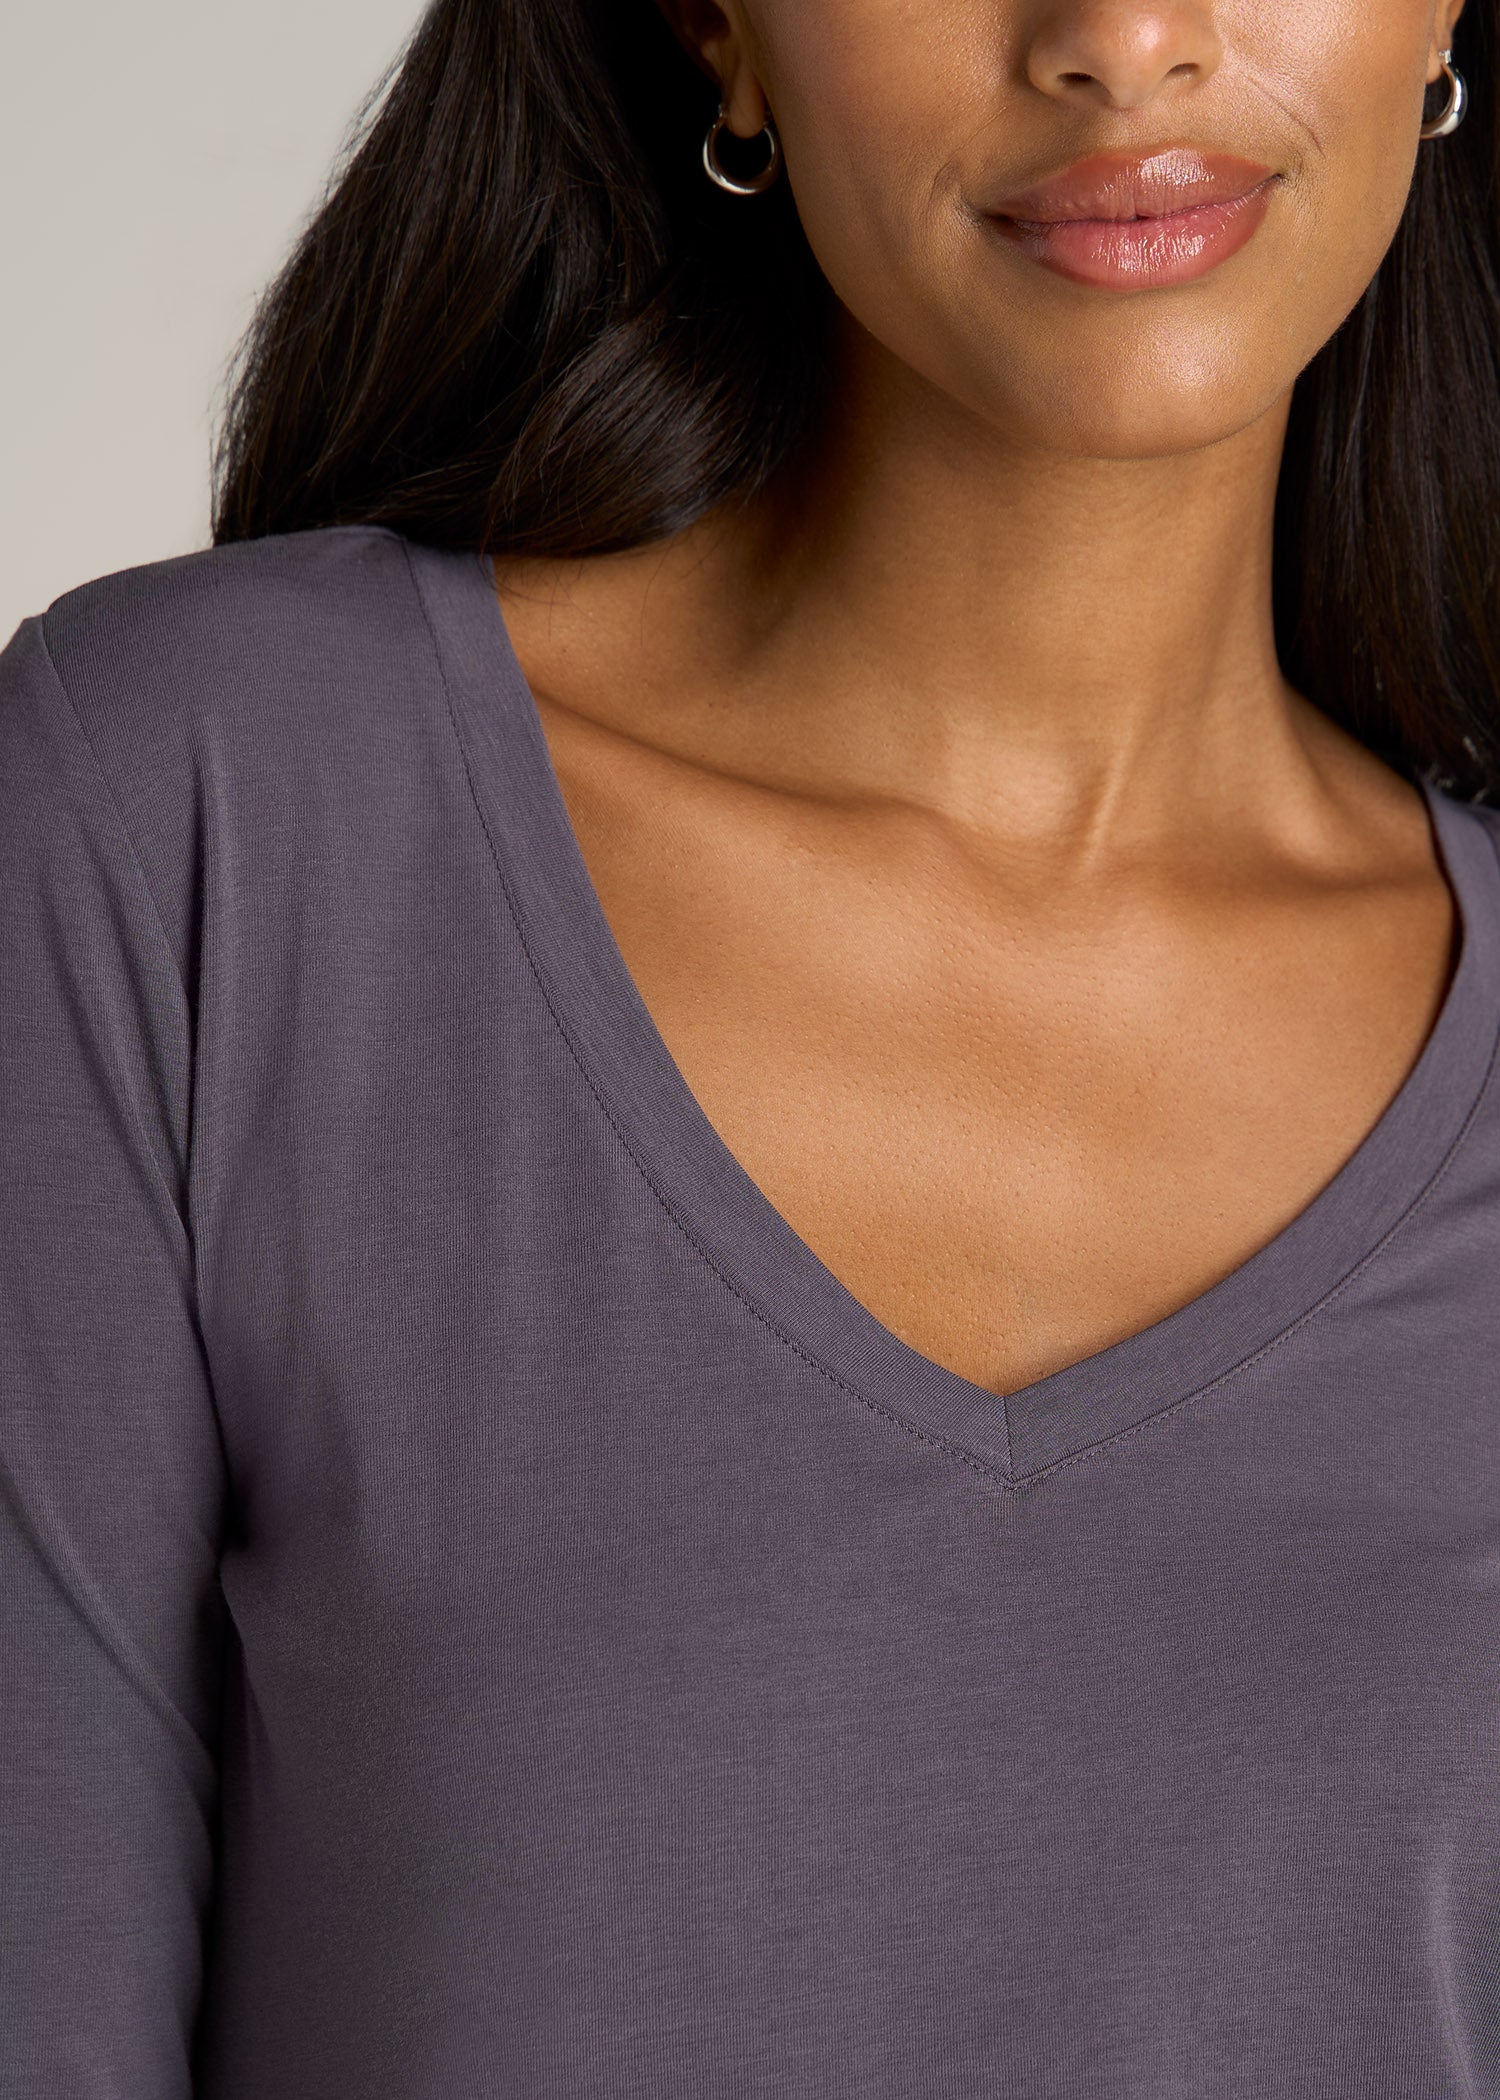 Long Sleeve V-neck Tee Shirt (Small, Charcoal) at  Women's